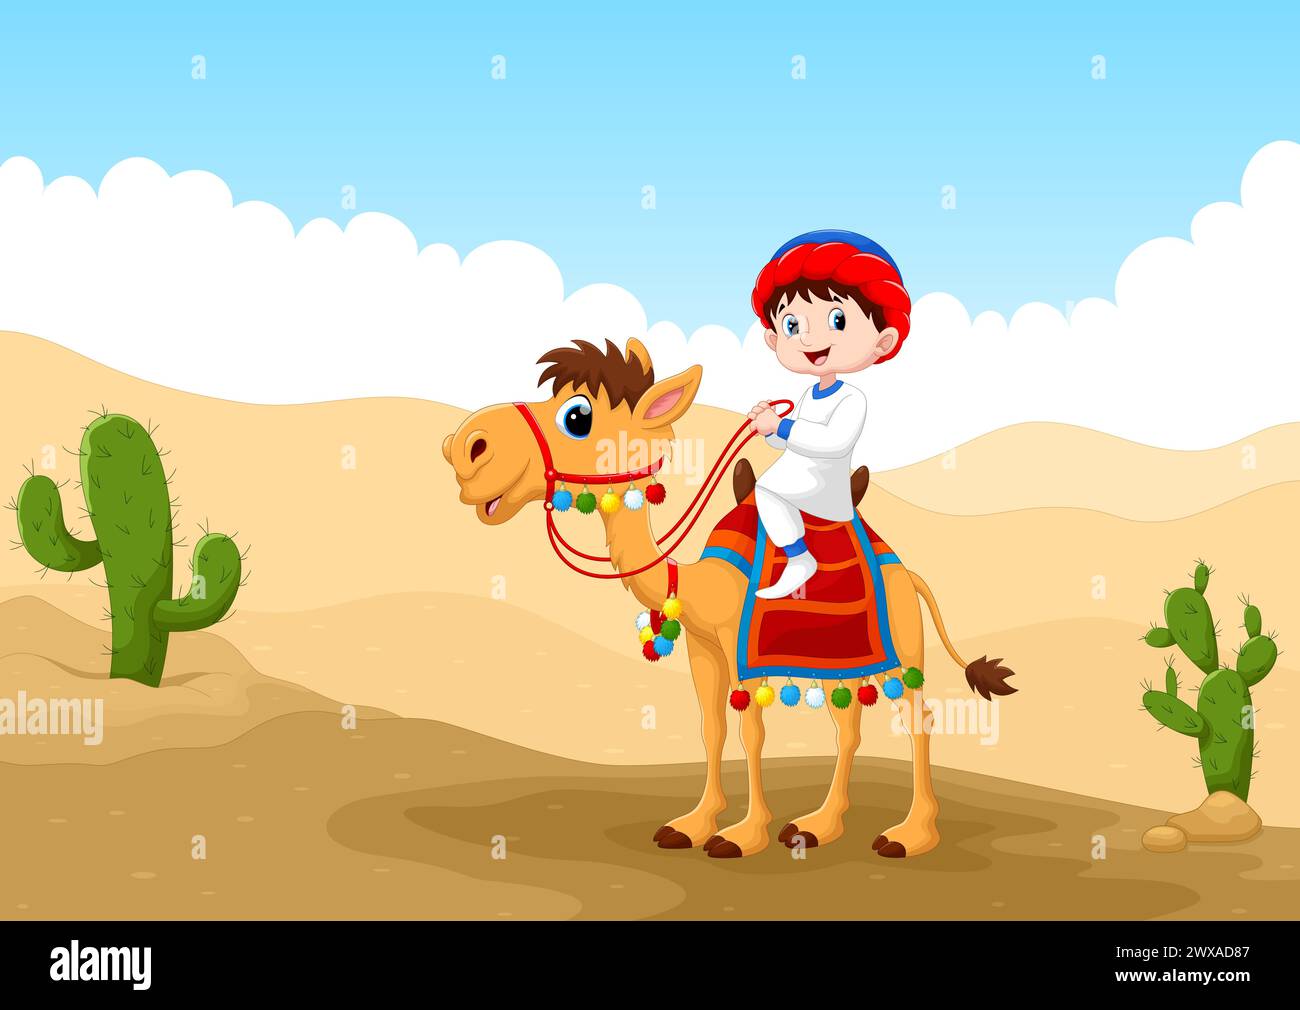 Illustration of Arab boy riding a camel in the desert Stock Vector